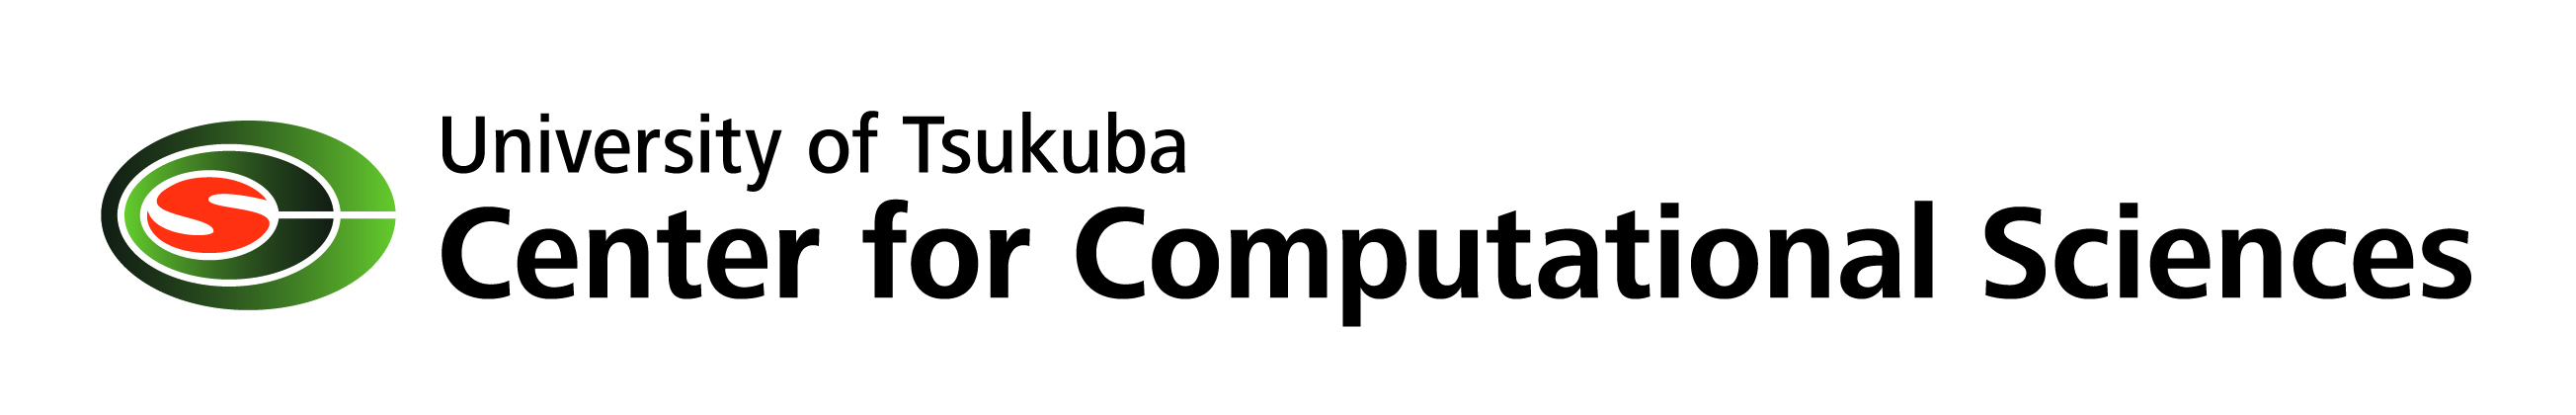 Tsukuba logo